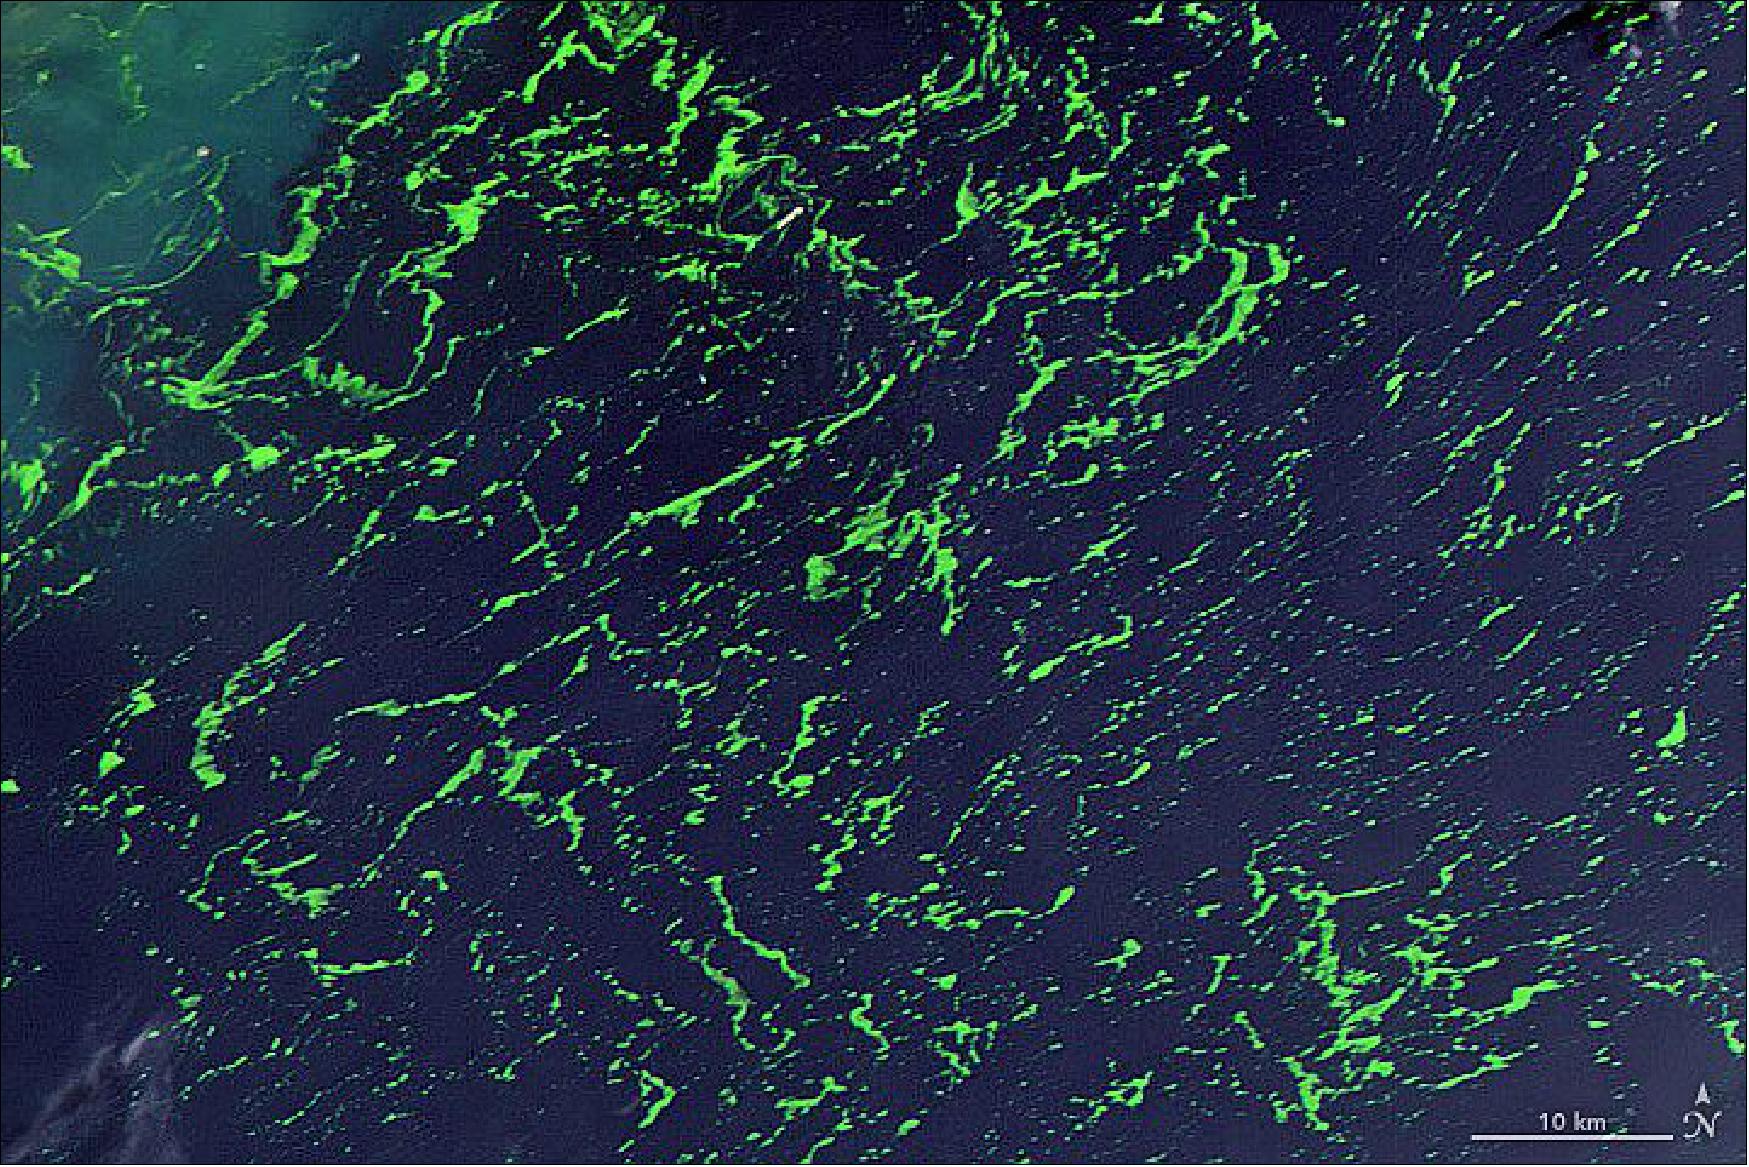 Figure 12: Detail image of Seaweed (image credit: NASA Earth Observatory)